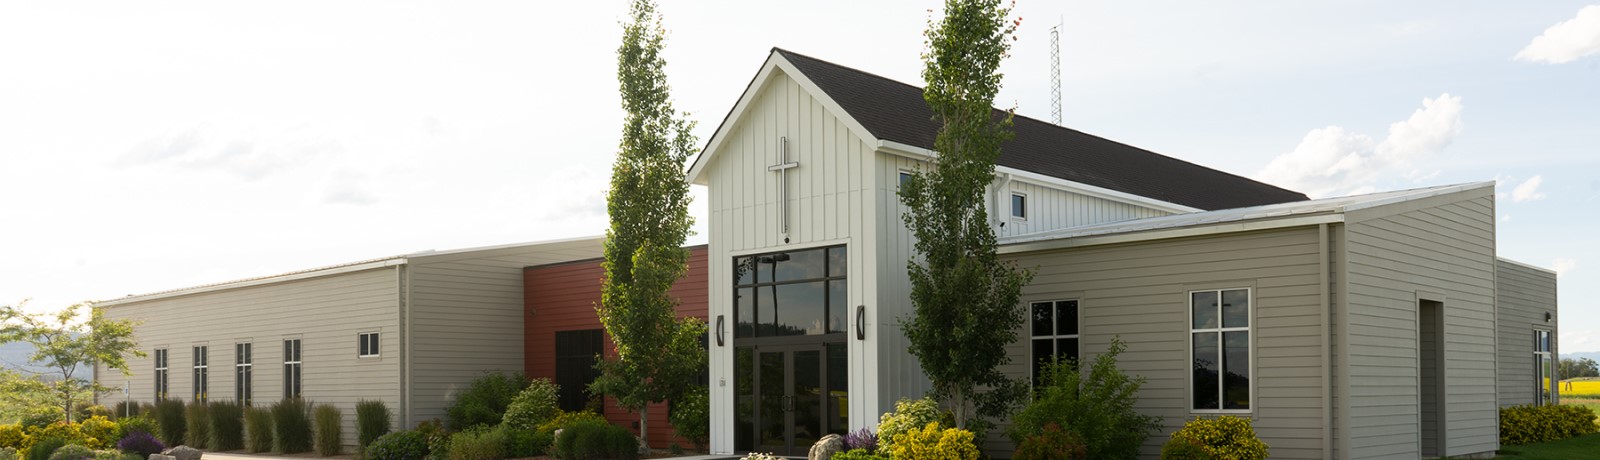 Kalispell Seventh - Day Adventist Church